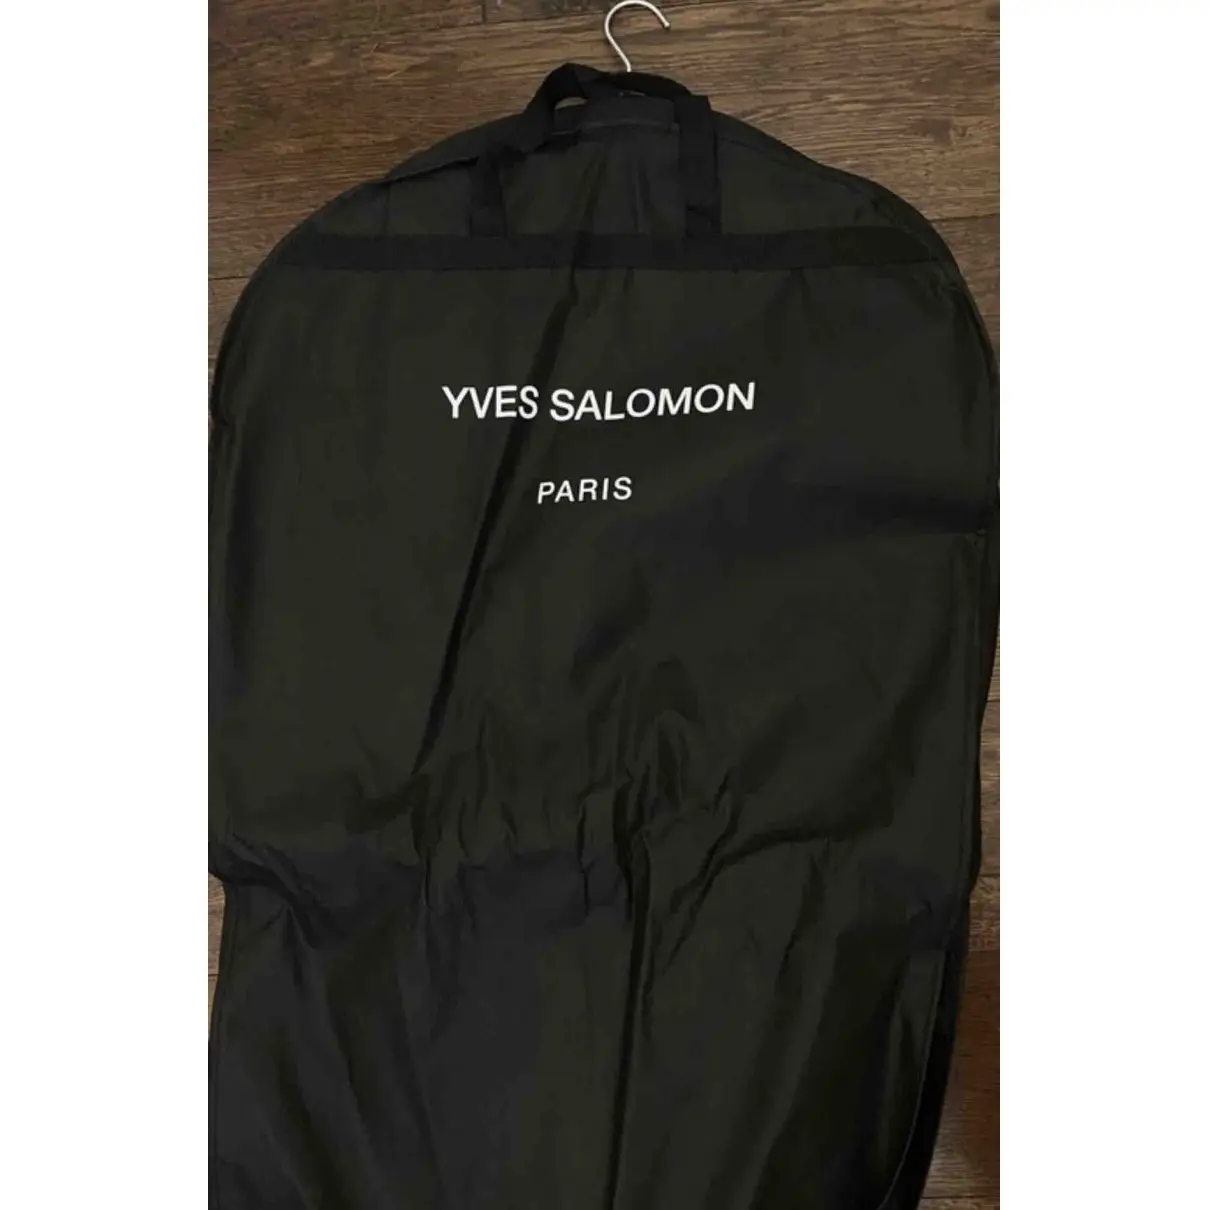 Buy Yves Salomon Coat online